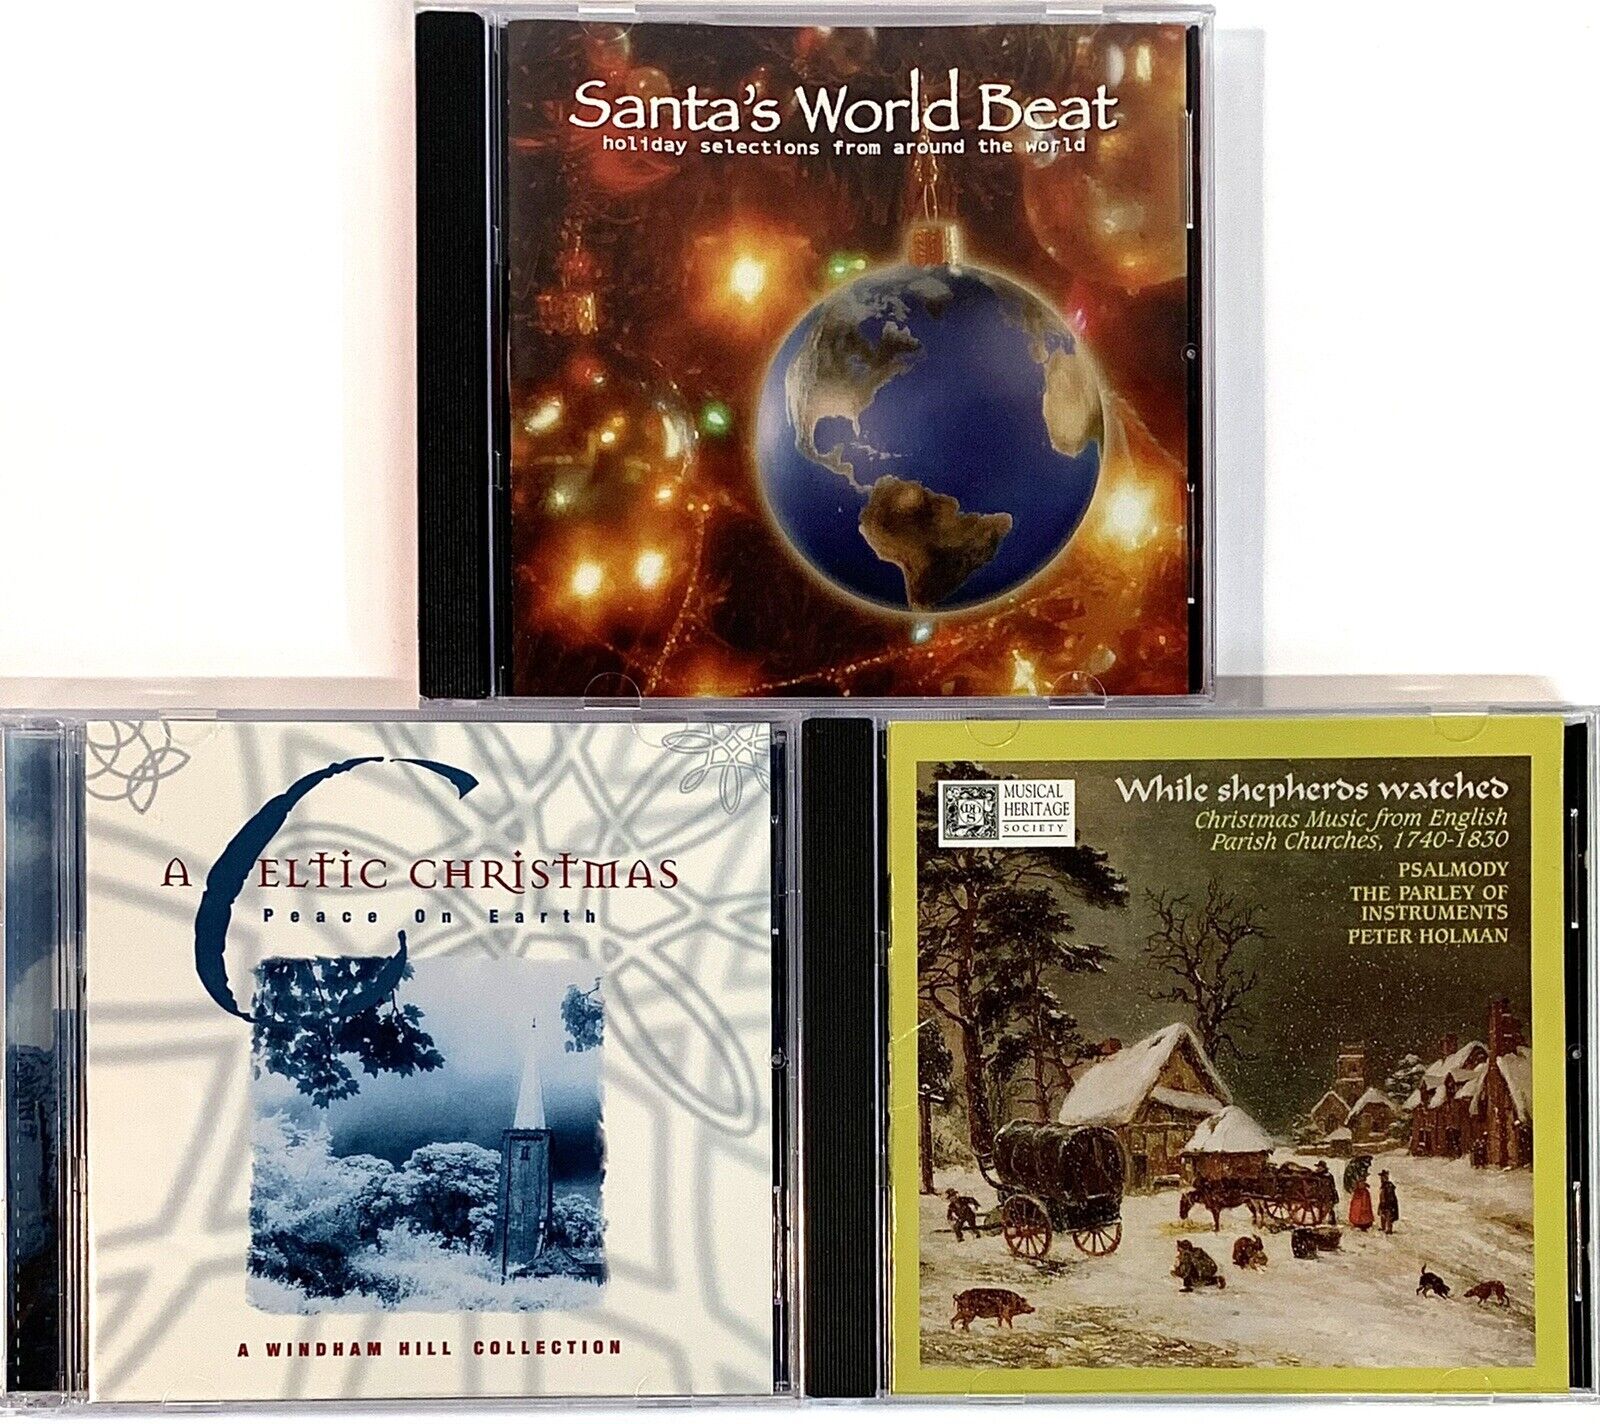 Christmas CD Lot 3 CDs A Celtic Christmas • Santa’s World Beat • While Shepherds